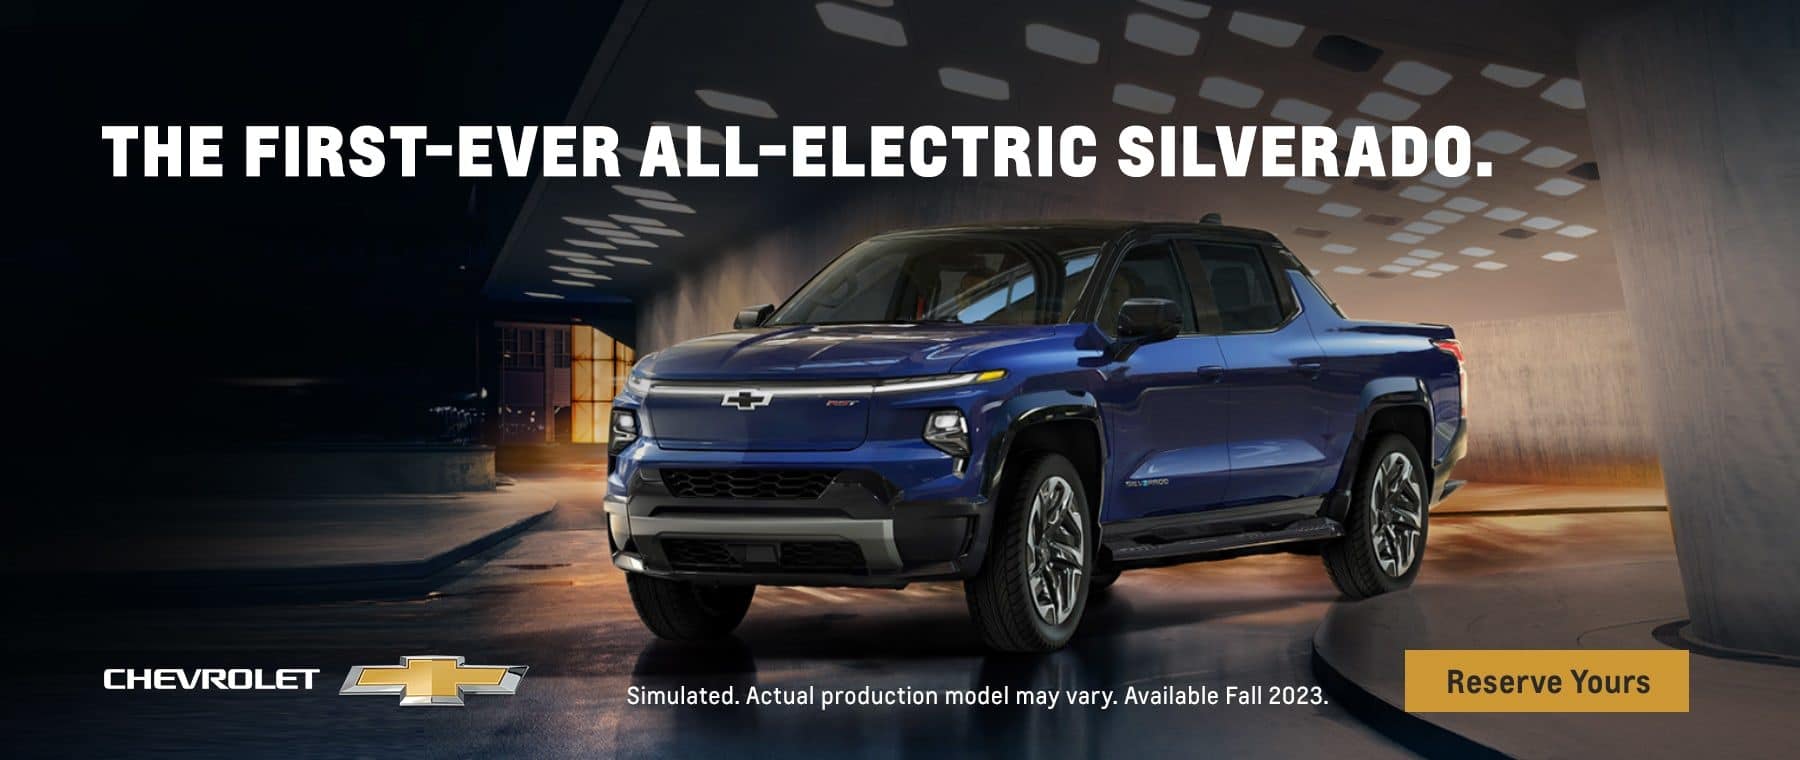 The first-ever-all-electric Silverado